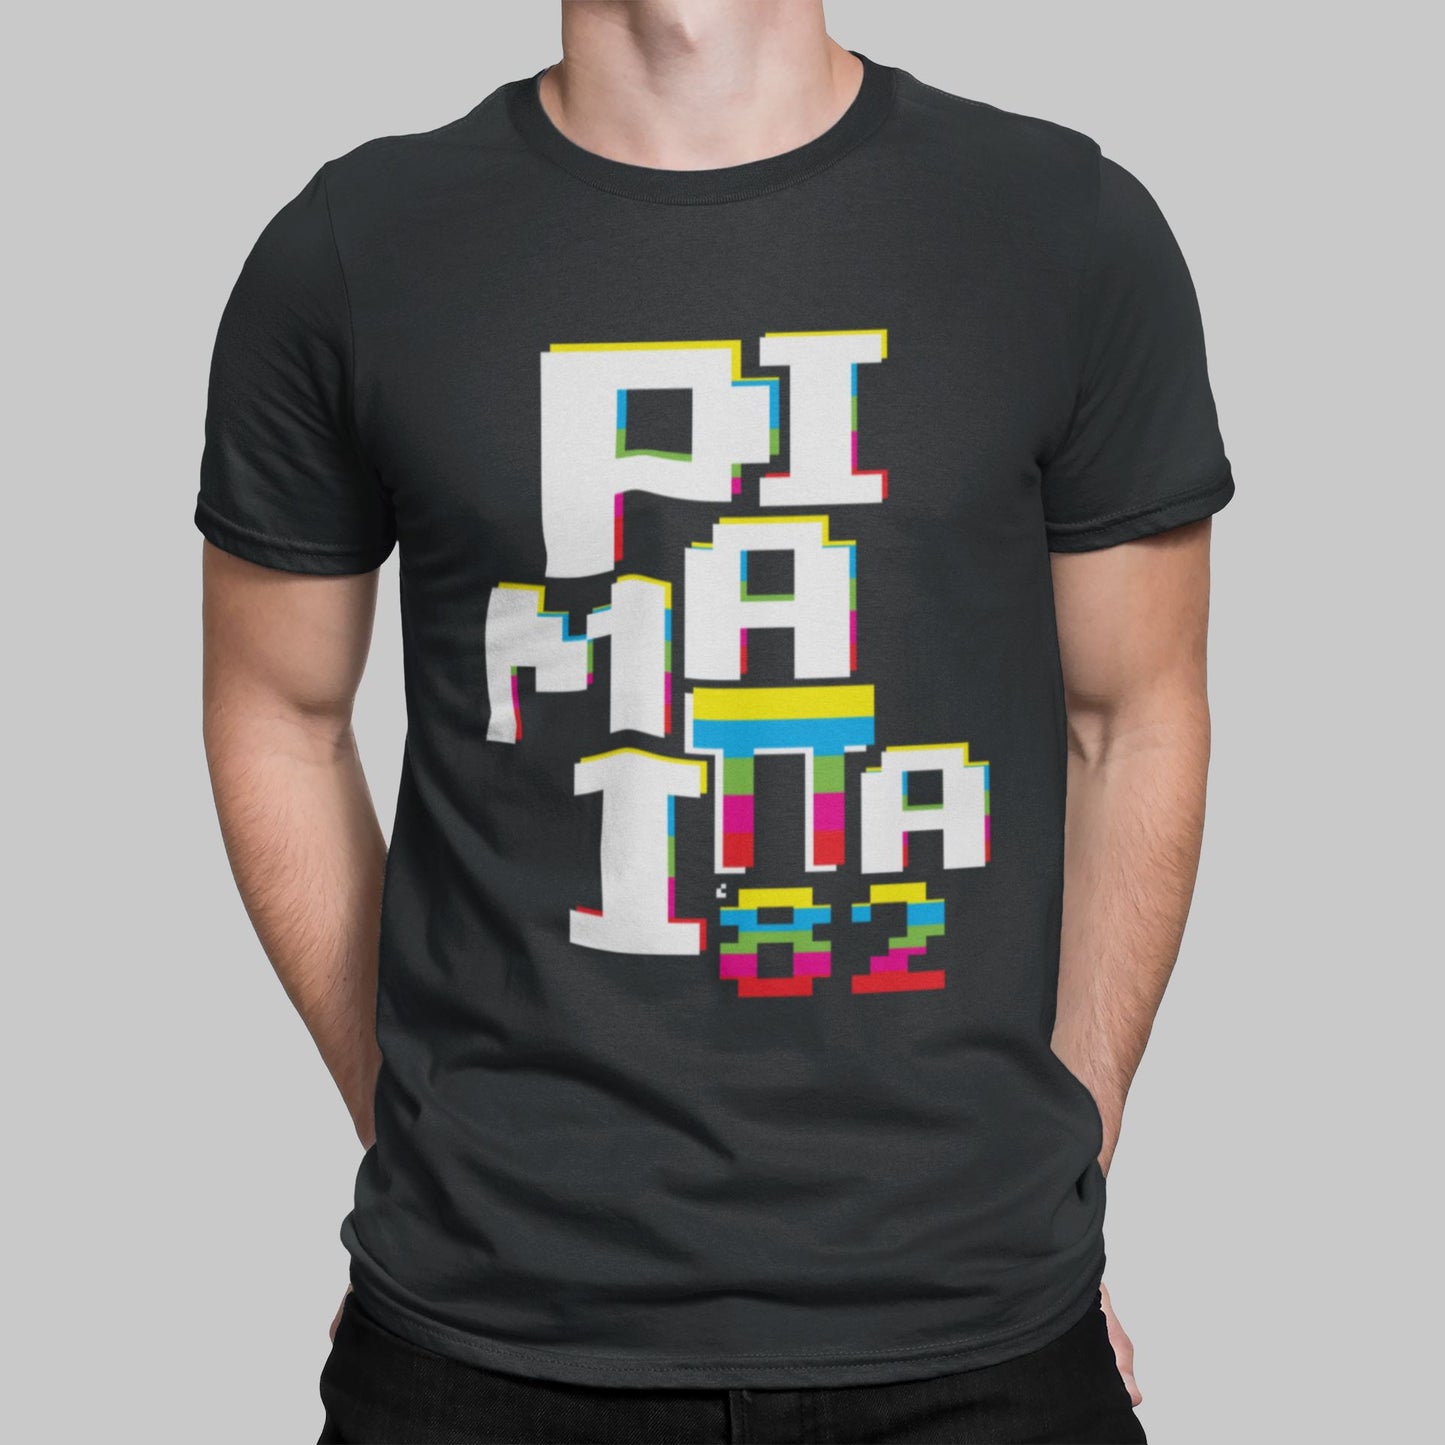 Pimania Retro Gaming T-Shirt T-Shirt Seven Squared Small 34-36" Black 